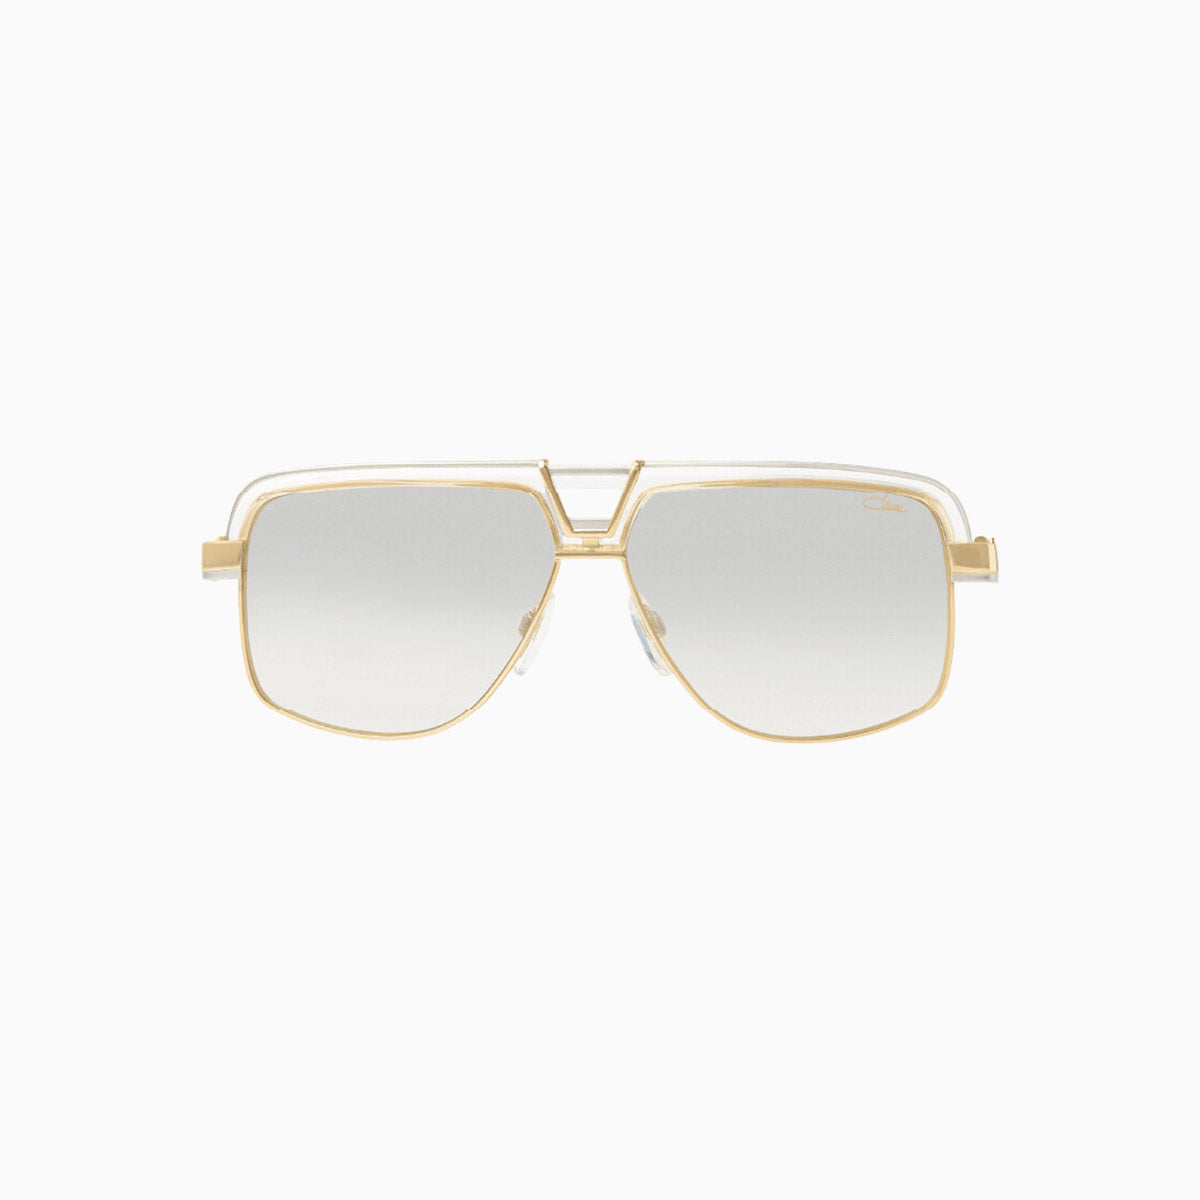 cazal-eyewear-mens-cazal-991-003-crystal-gold-sunglasses-cz0991sg003